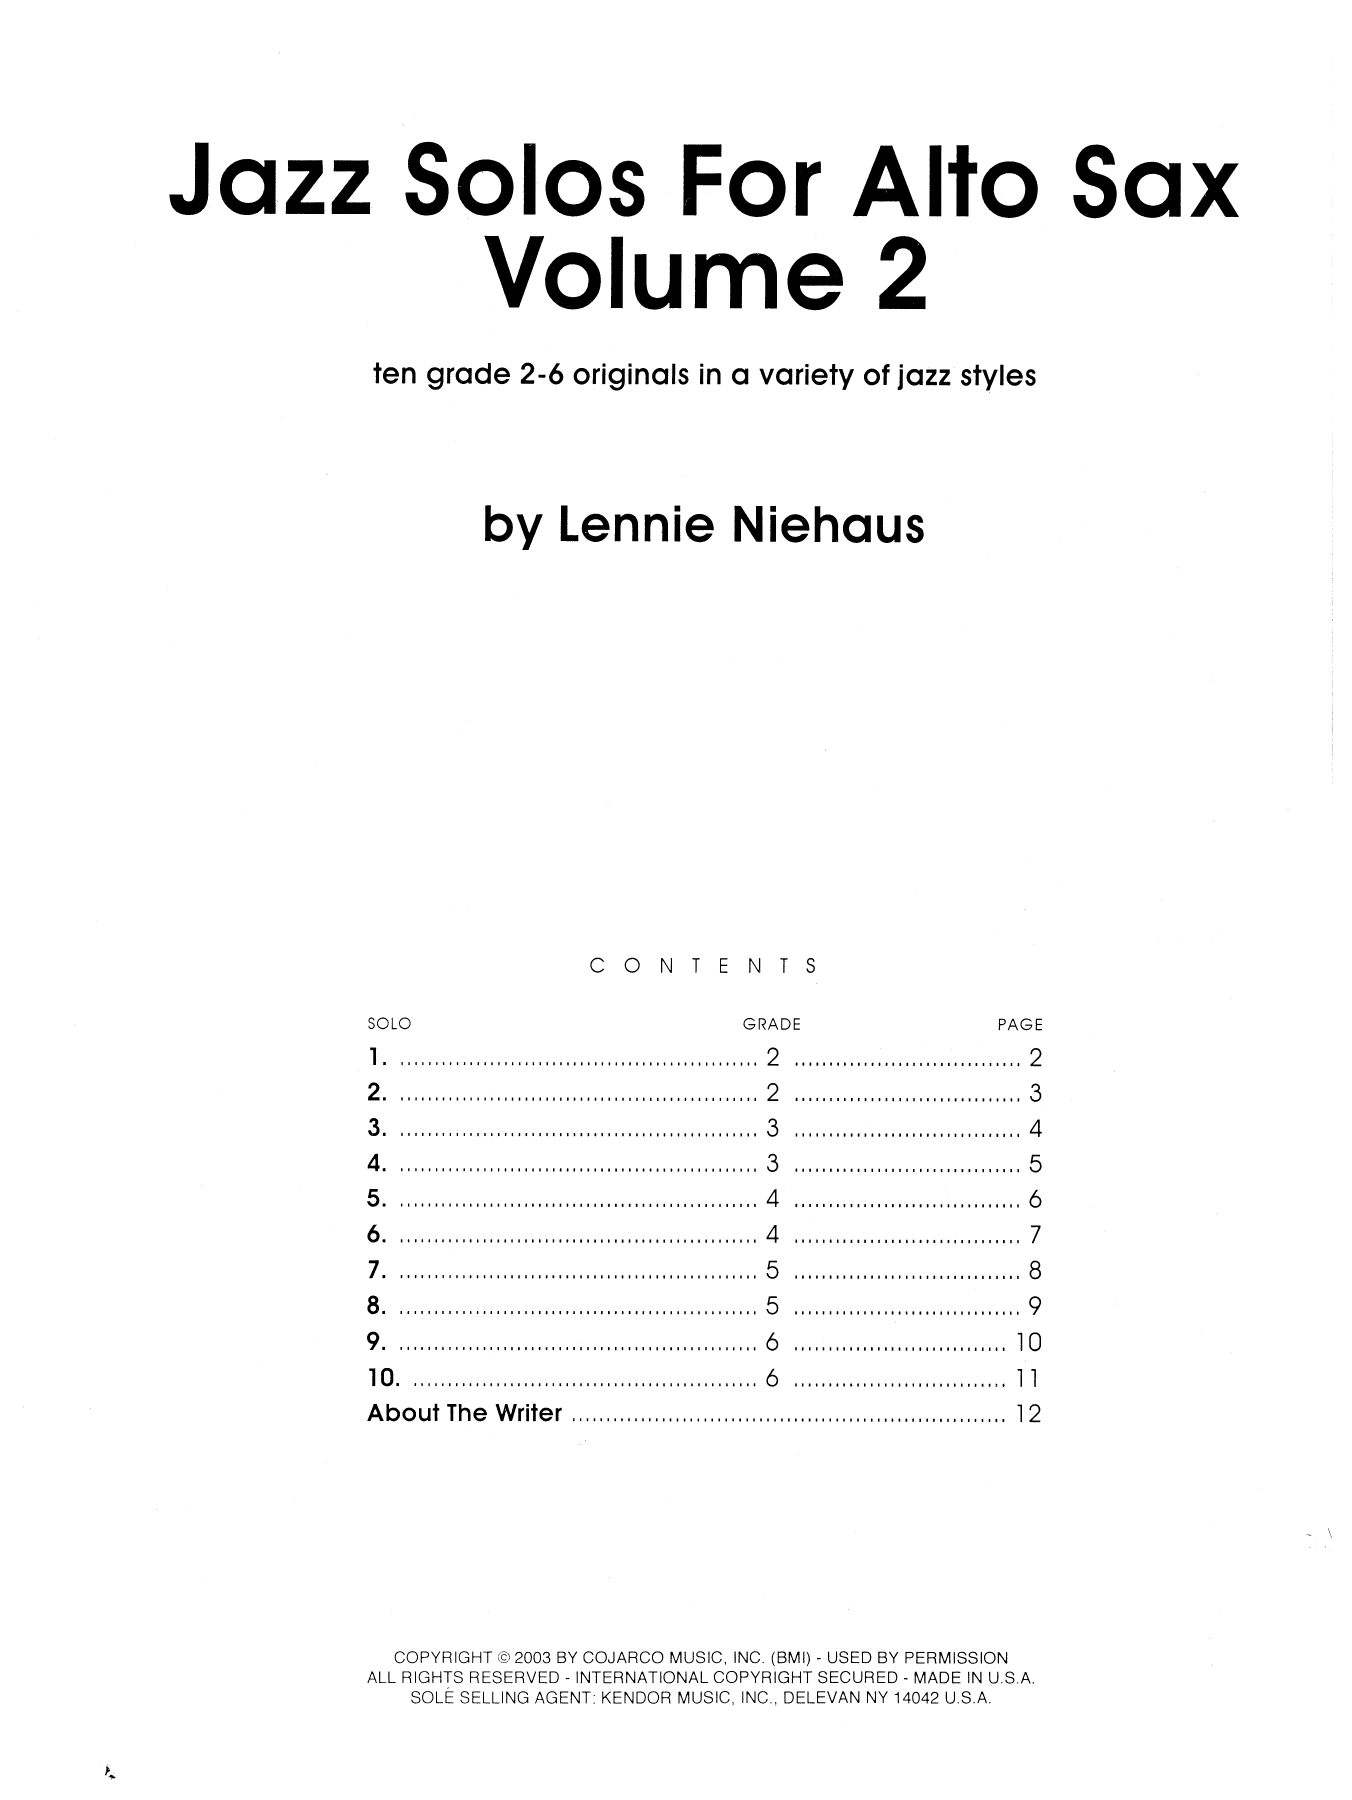 Download Lennie Niehaus Jazz Solos For Alto Sax, Volume 2 Sheet Music